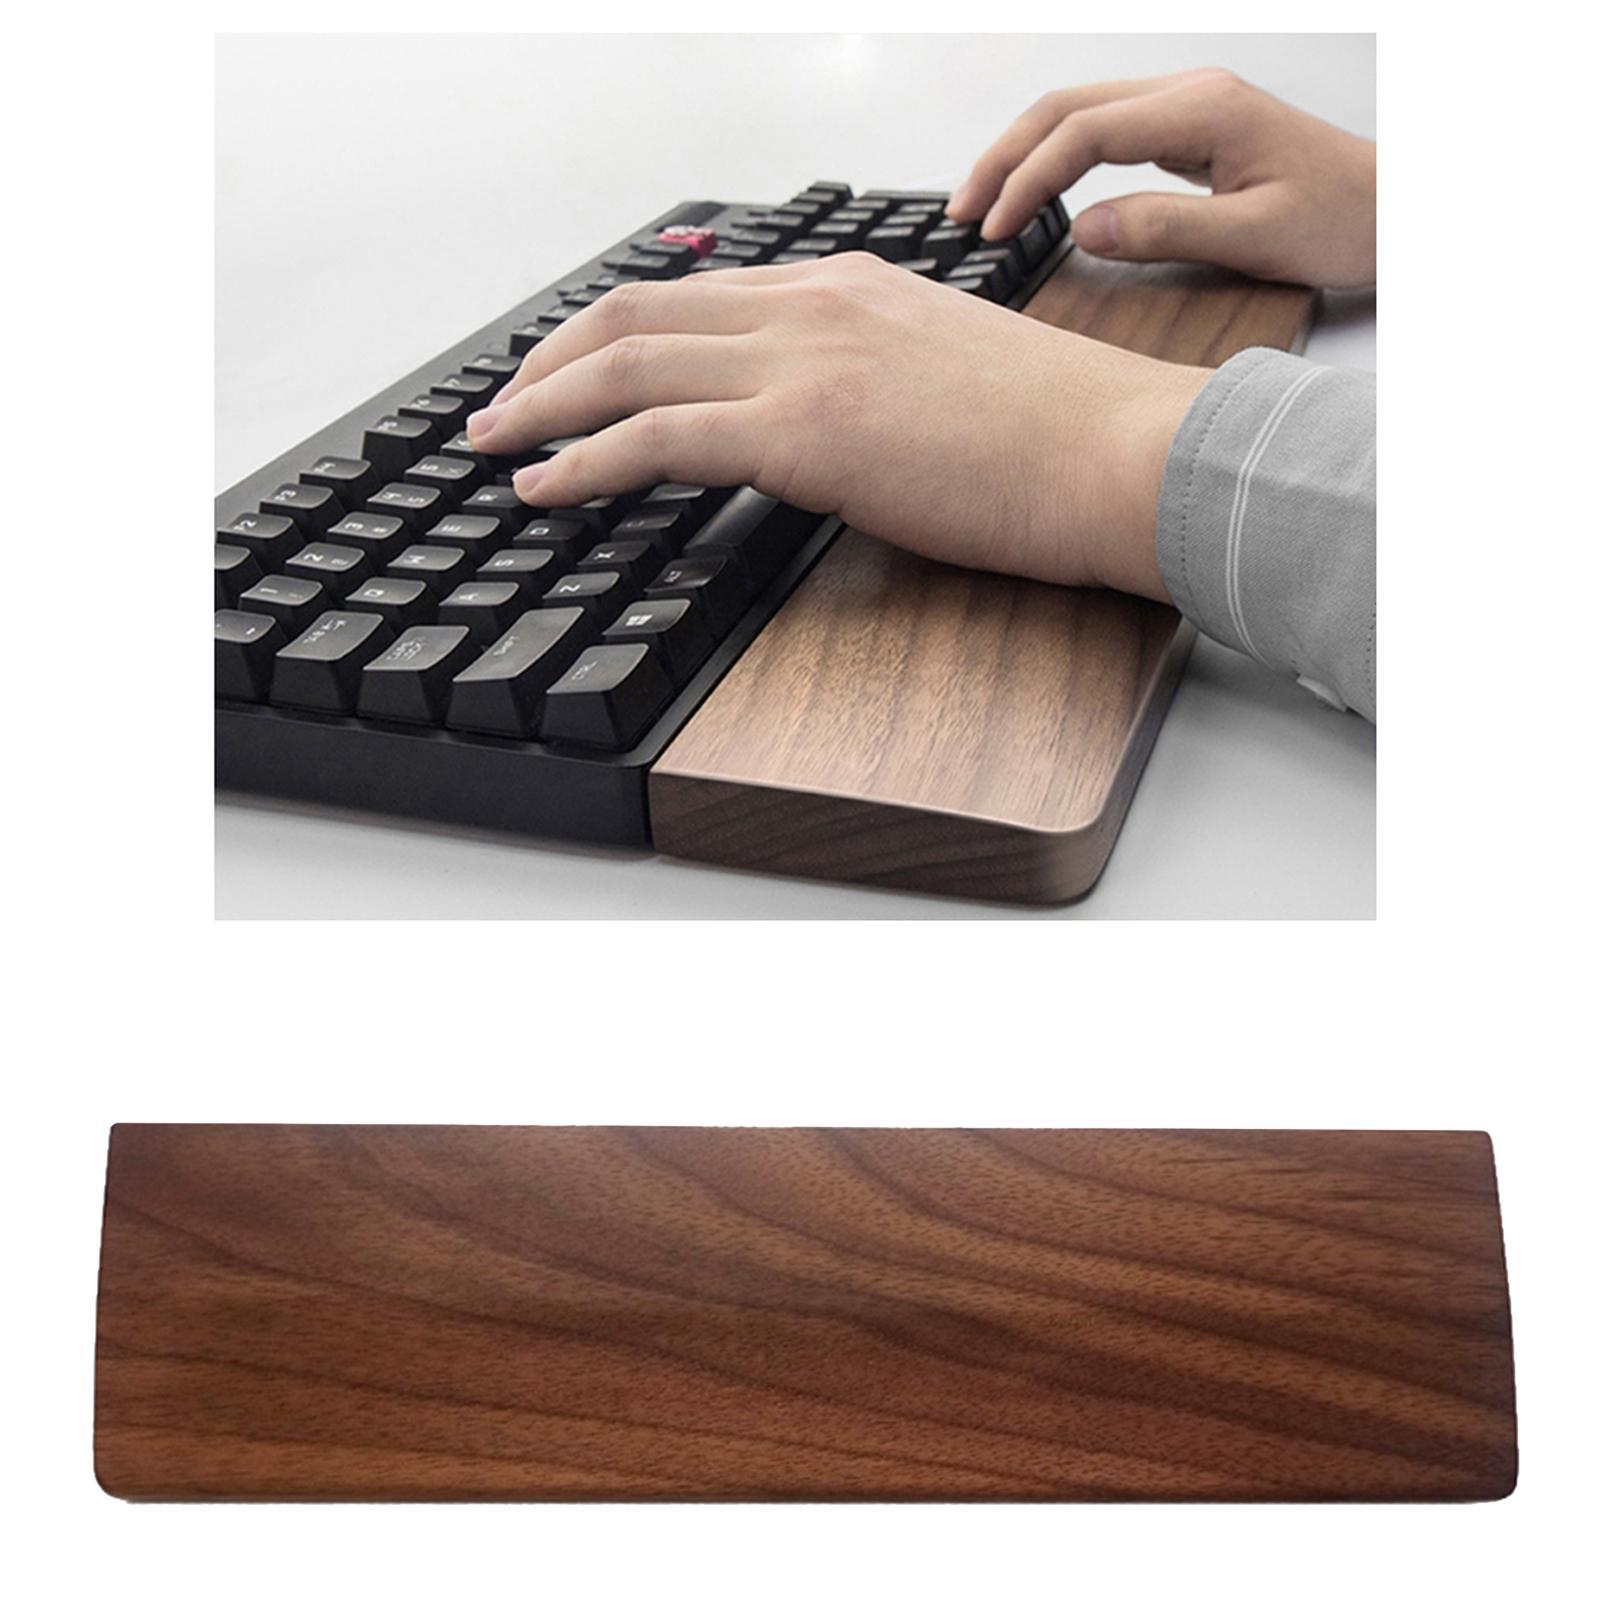 Computer Keyboard Holder Wooden Hand Pad Wrist Rest Palm Rest